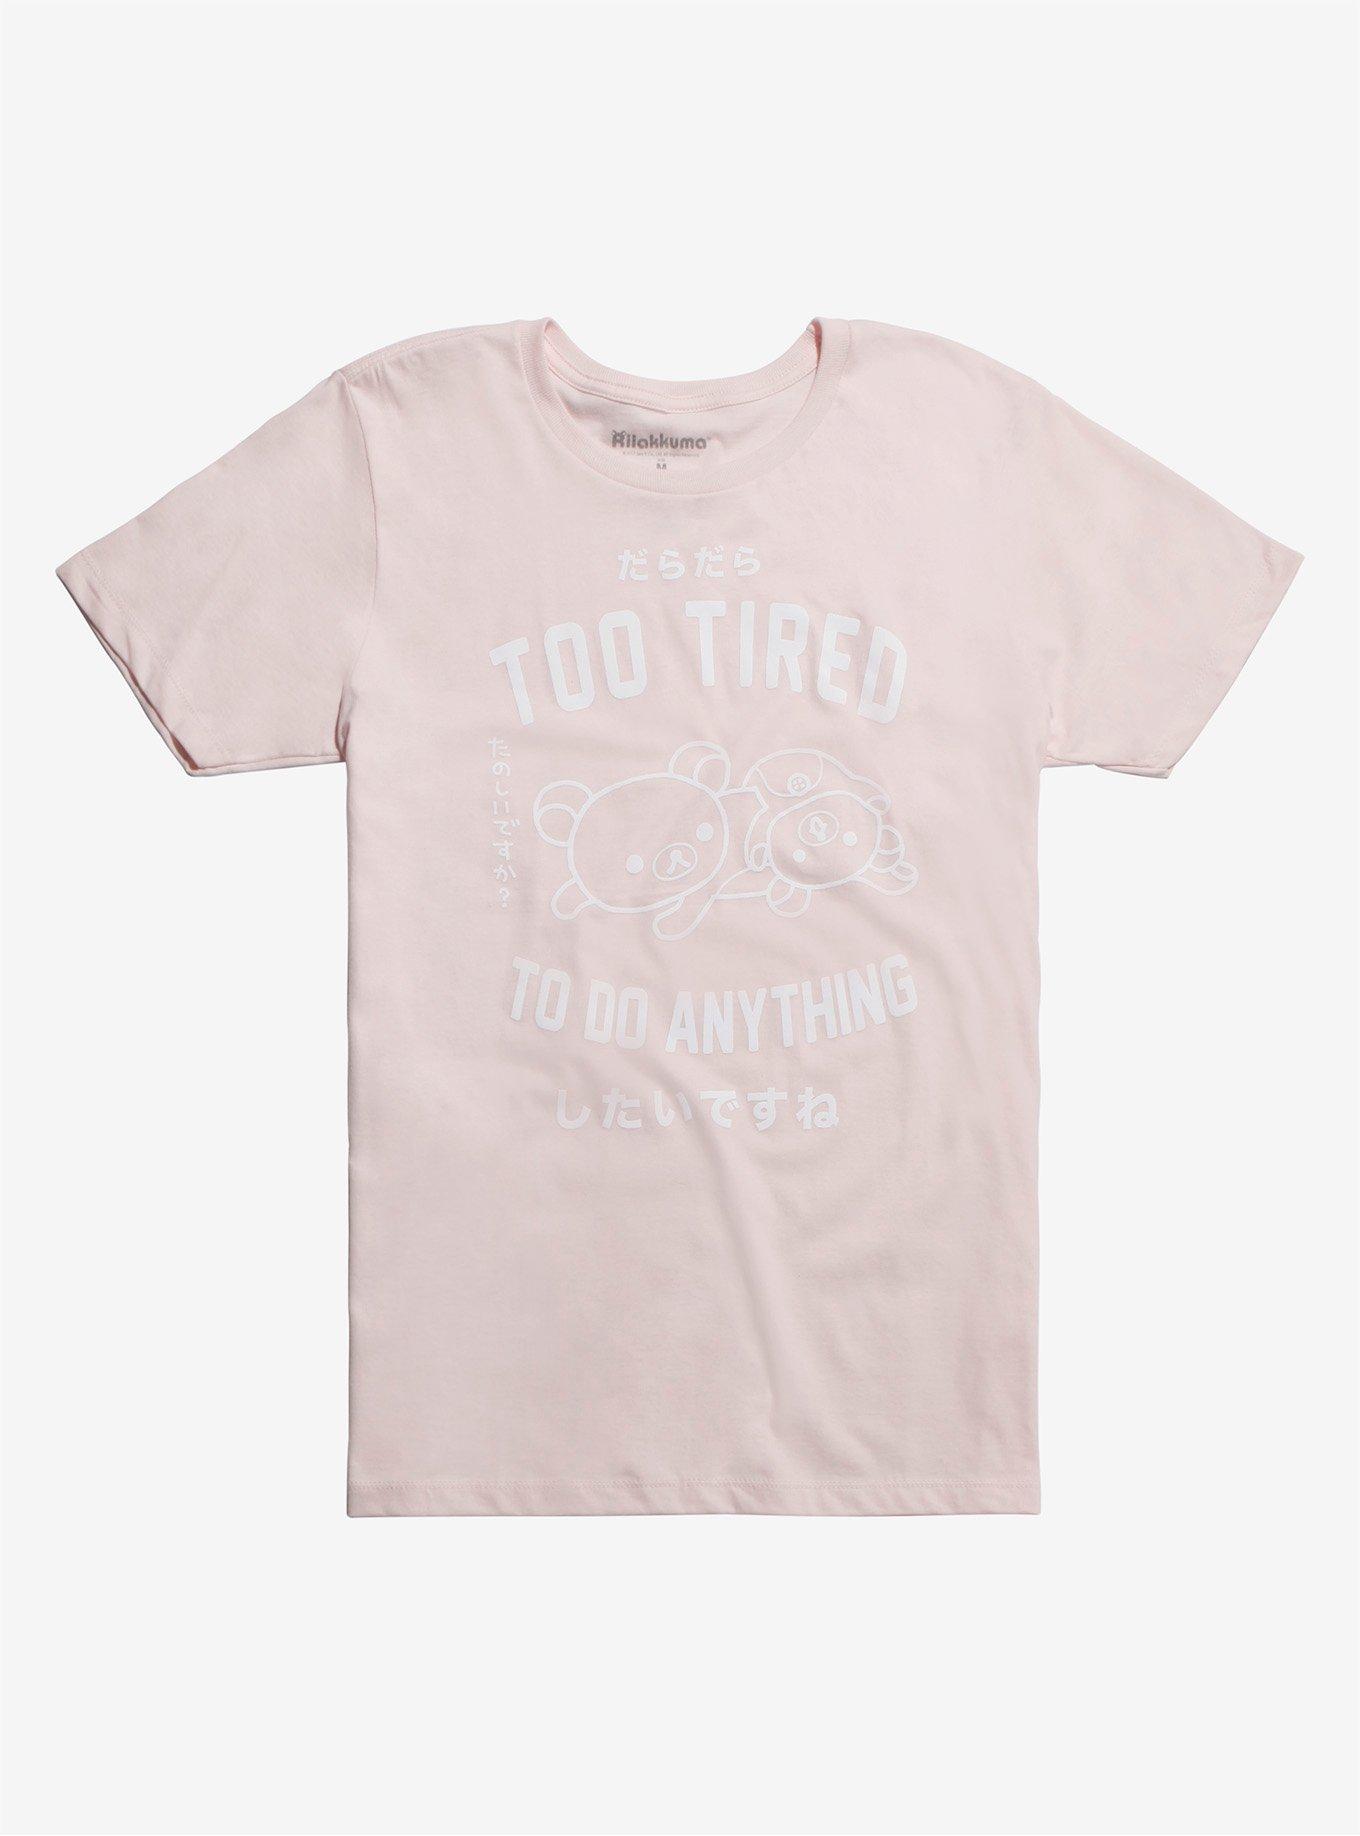 Rilakkuma Too Tired Pink T-Shirt Hot Topic Exclusive, PINK, hi-res